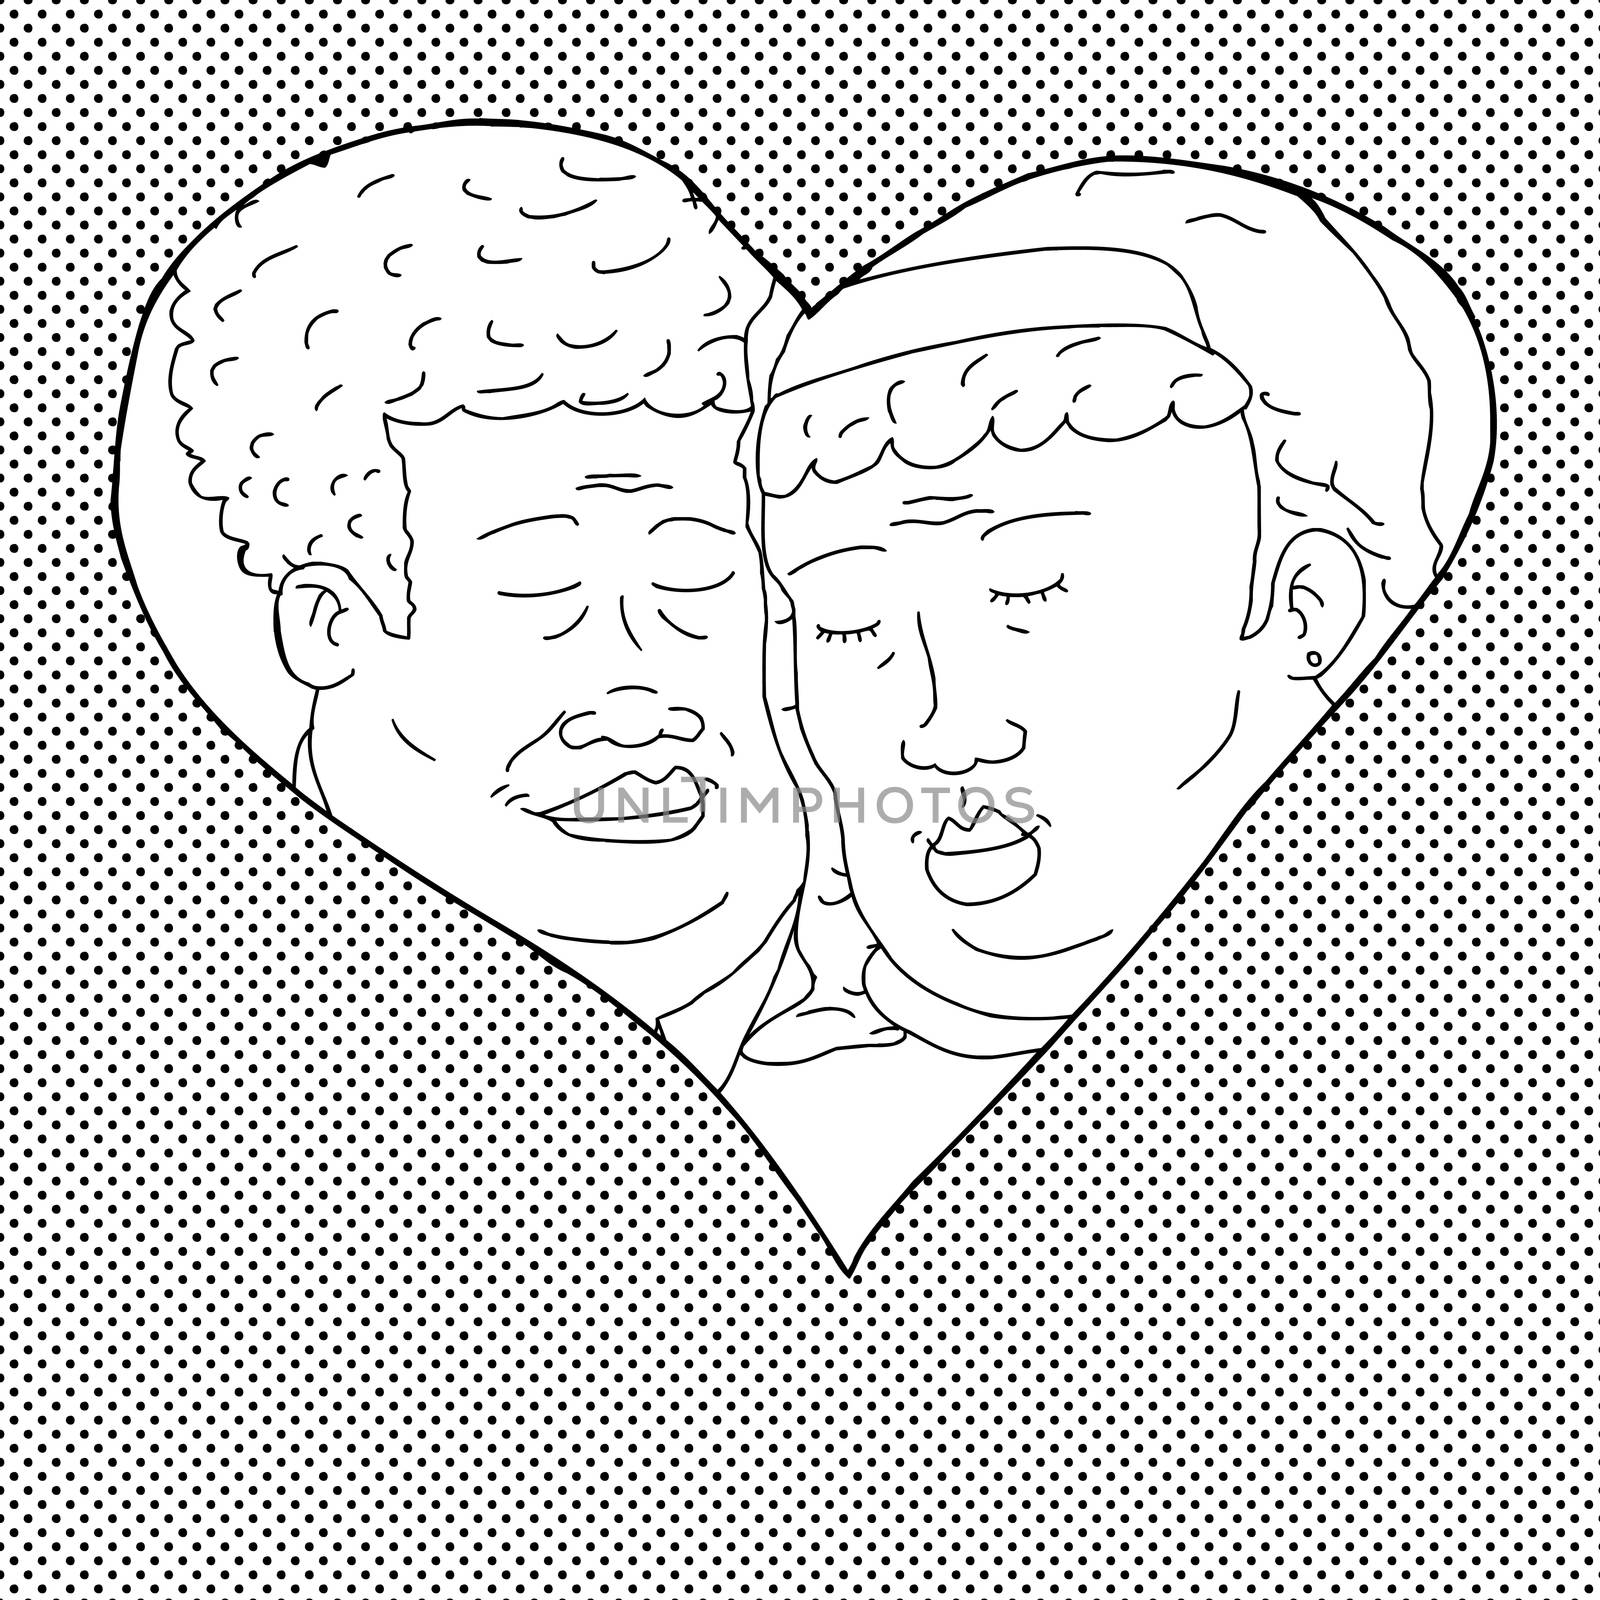 Hand drawn cartoon of happy couple in heart shape